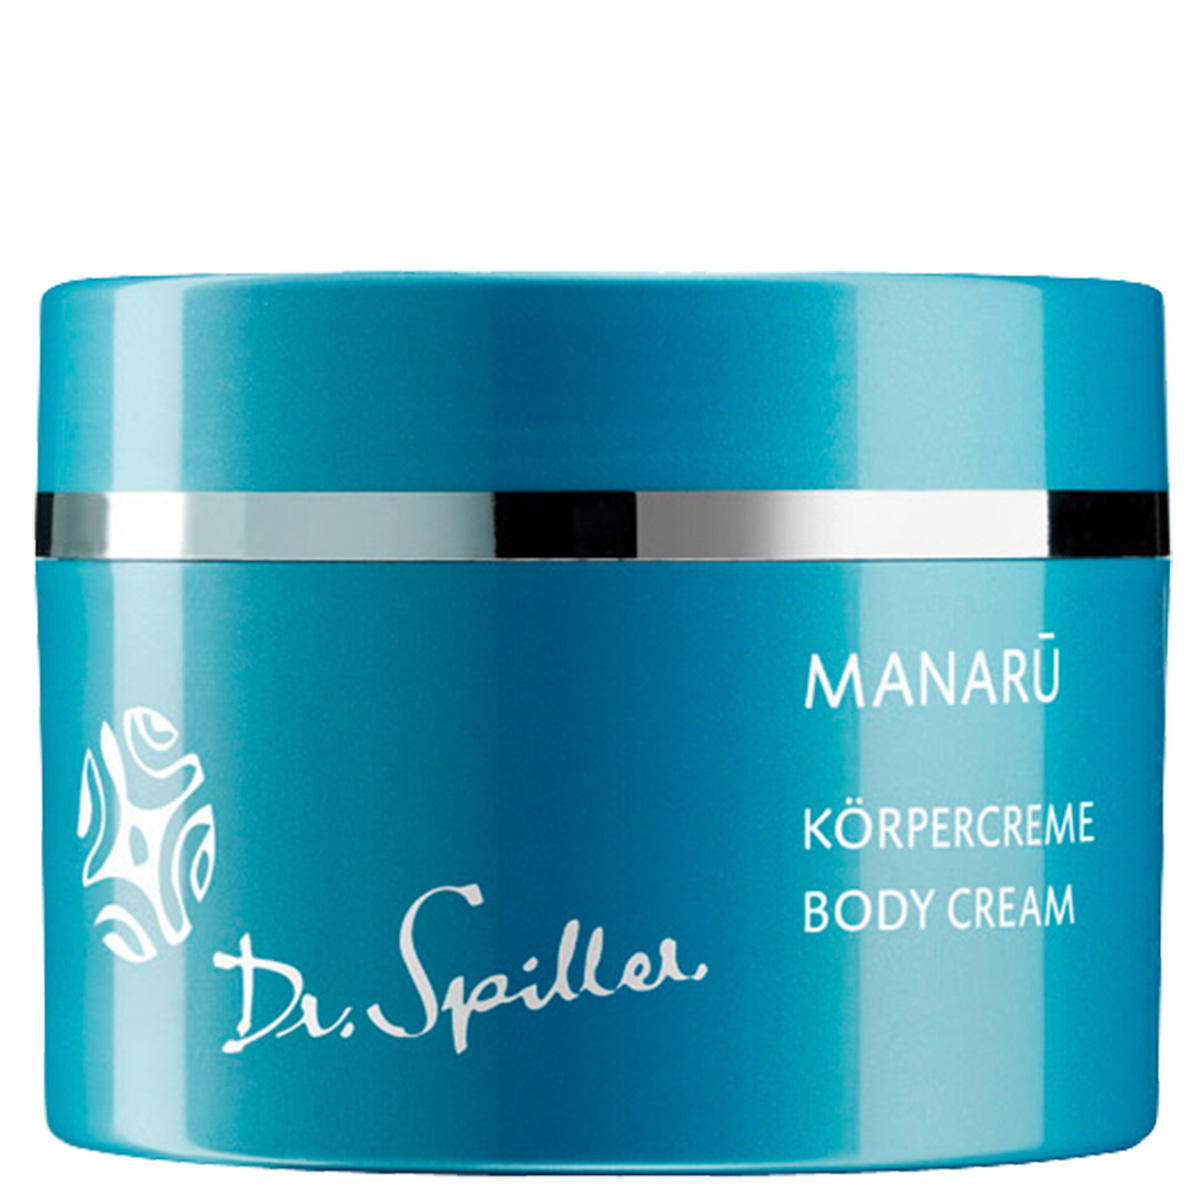 Dr. Spiller MANARU body cream 250 ml - 1